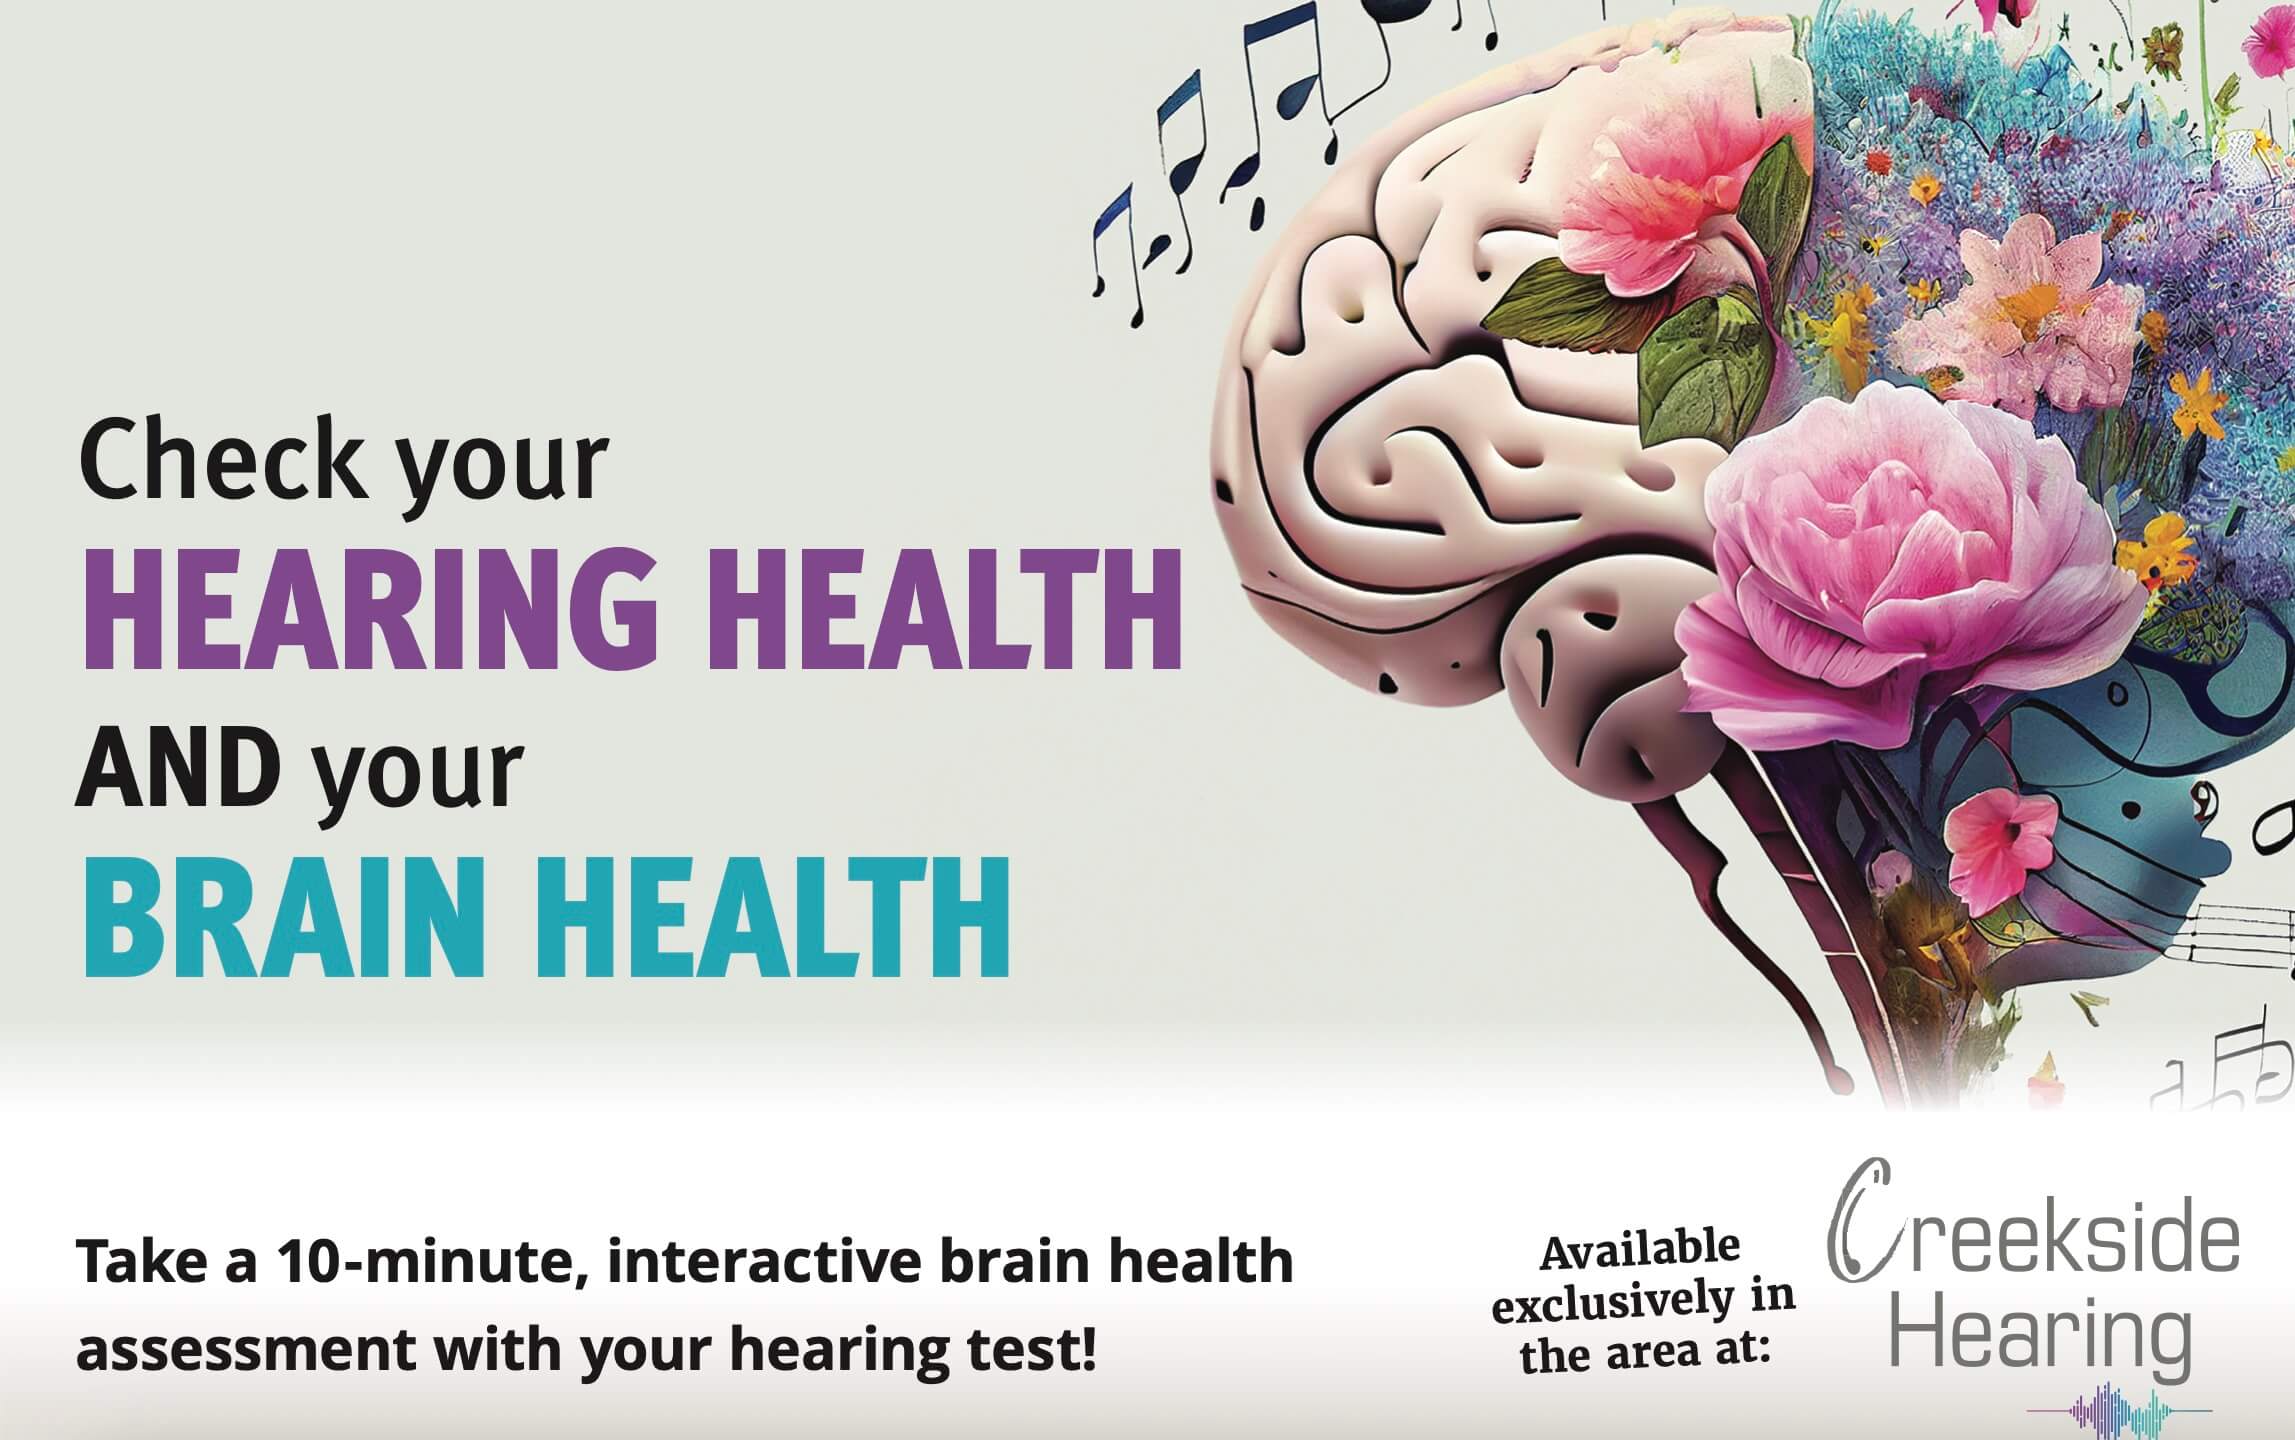 Creekside Hearing & Brain Health